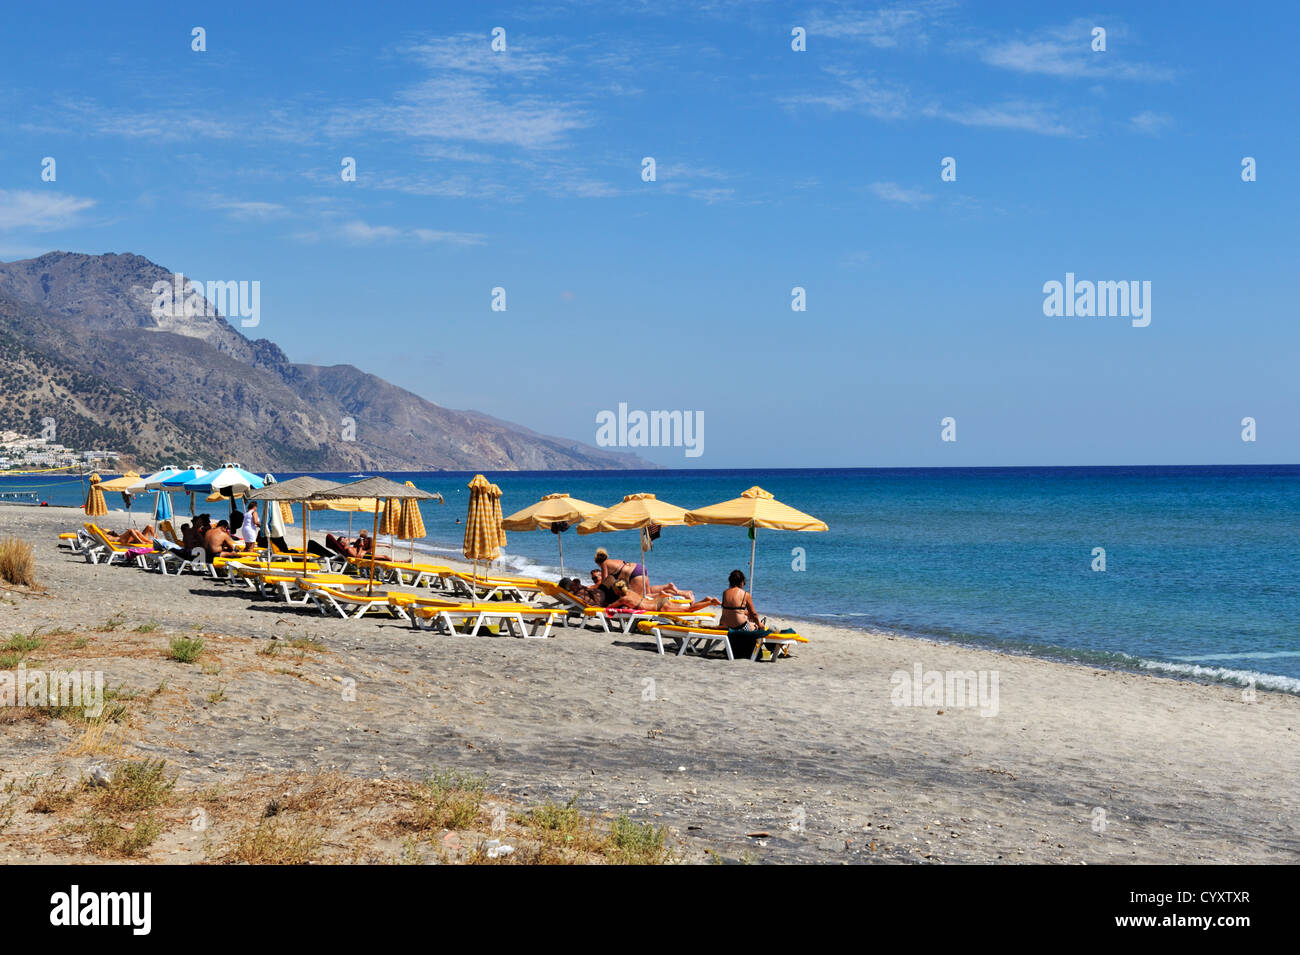 Beach with sunbathers at Kardamena, island of Kos, Greece Stock Photo